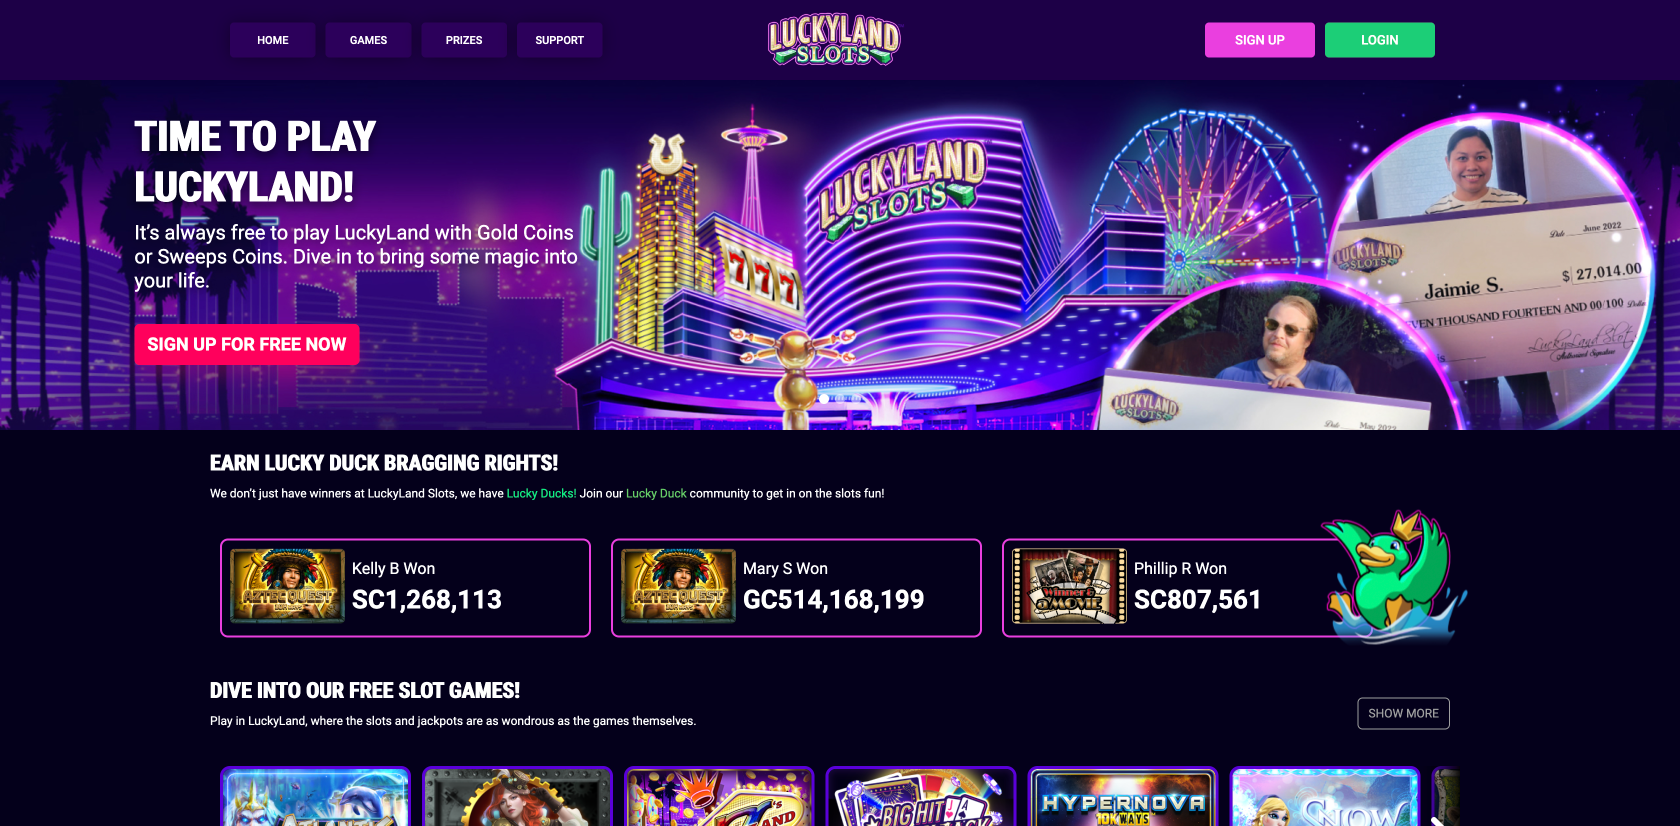 luckyland slots casino website